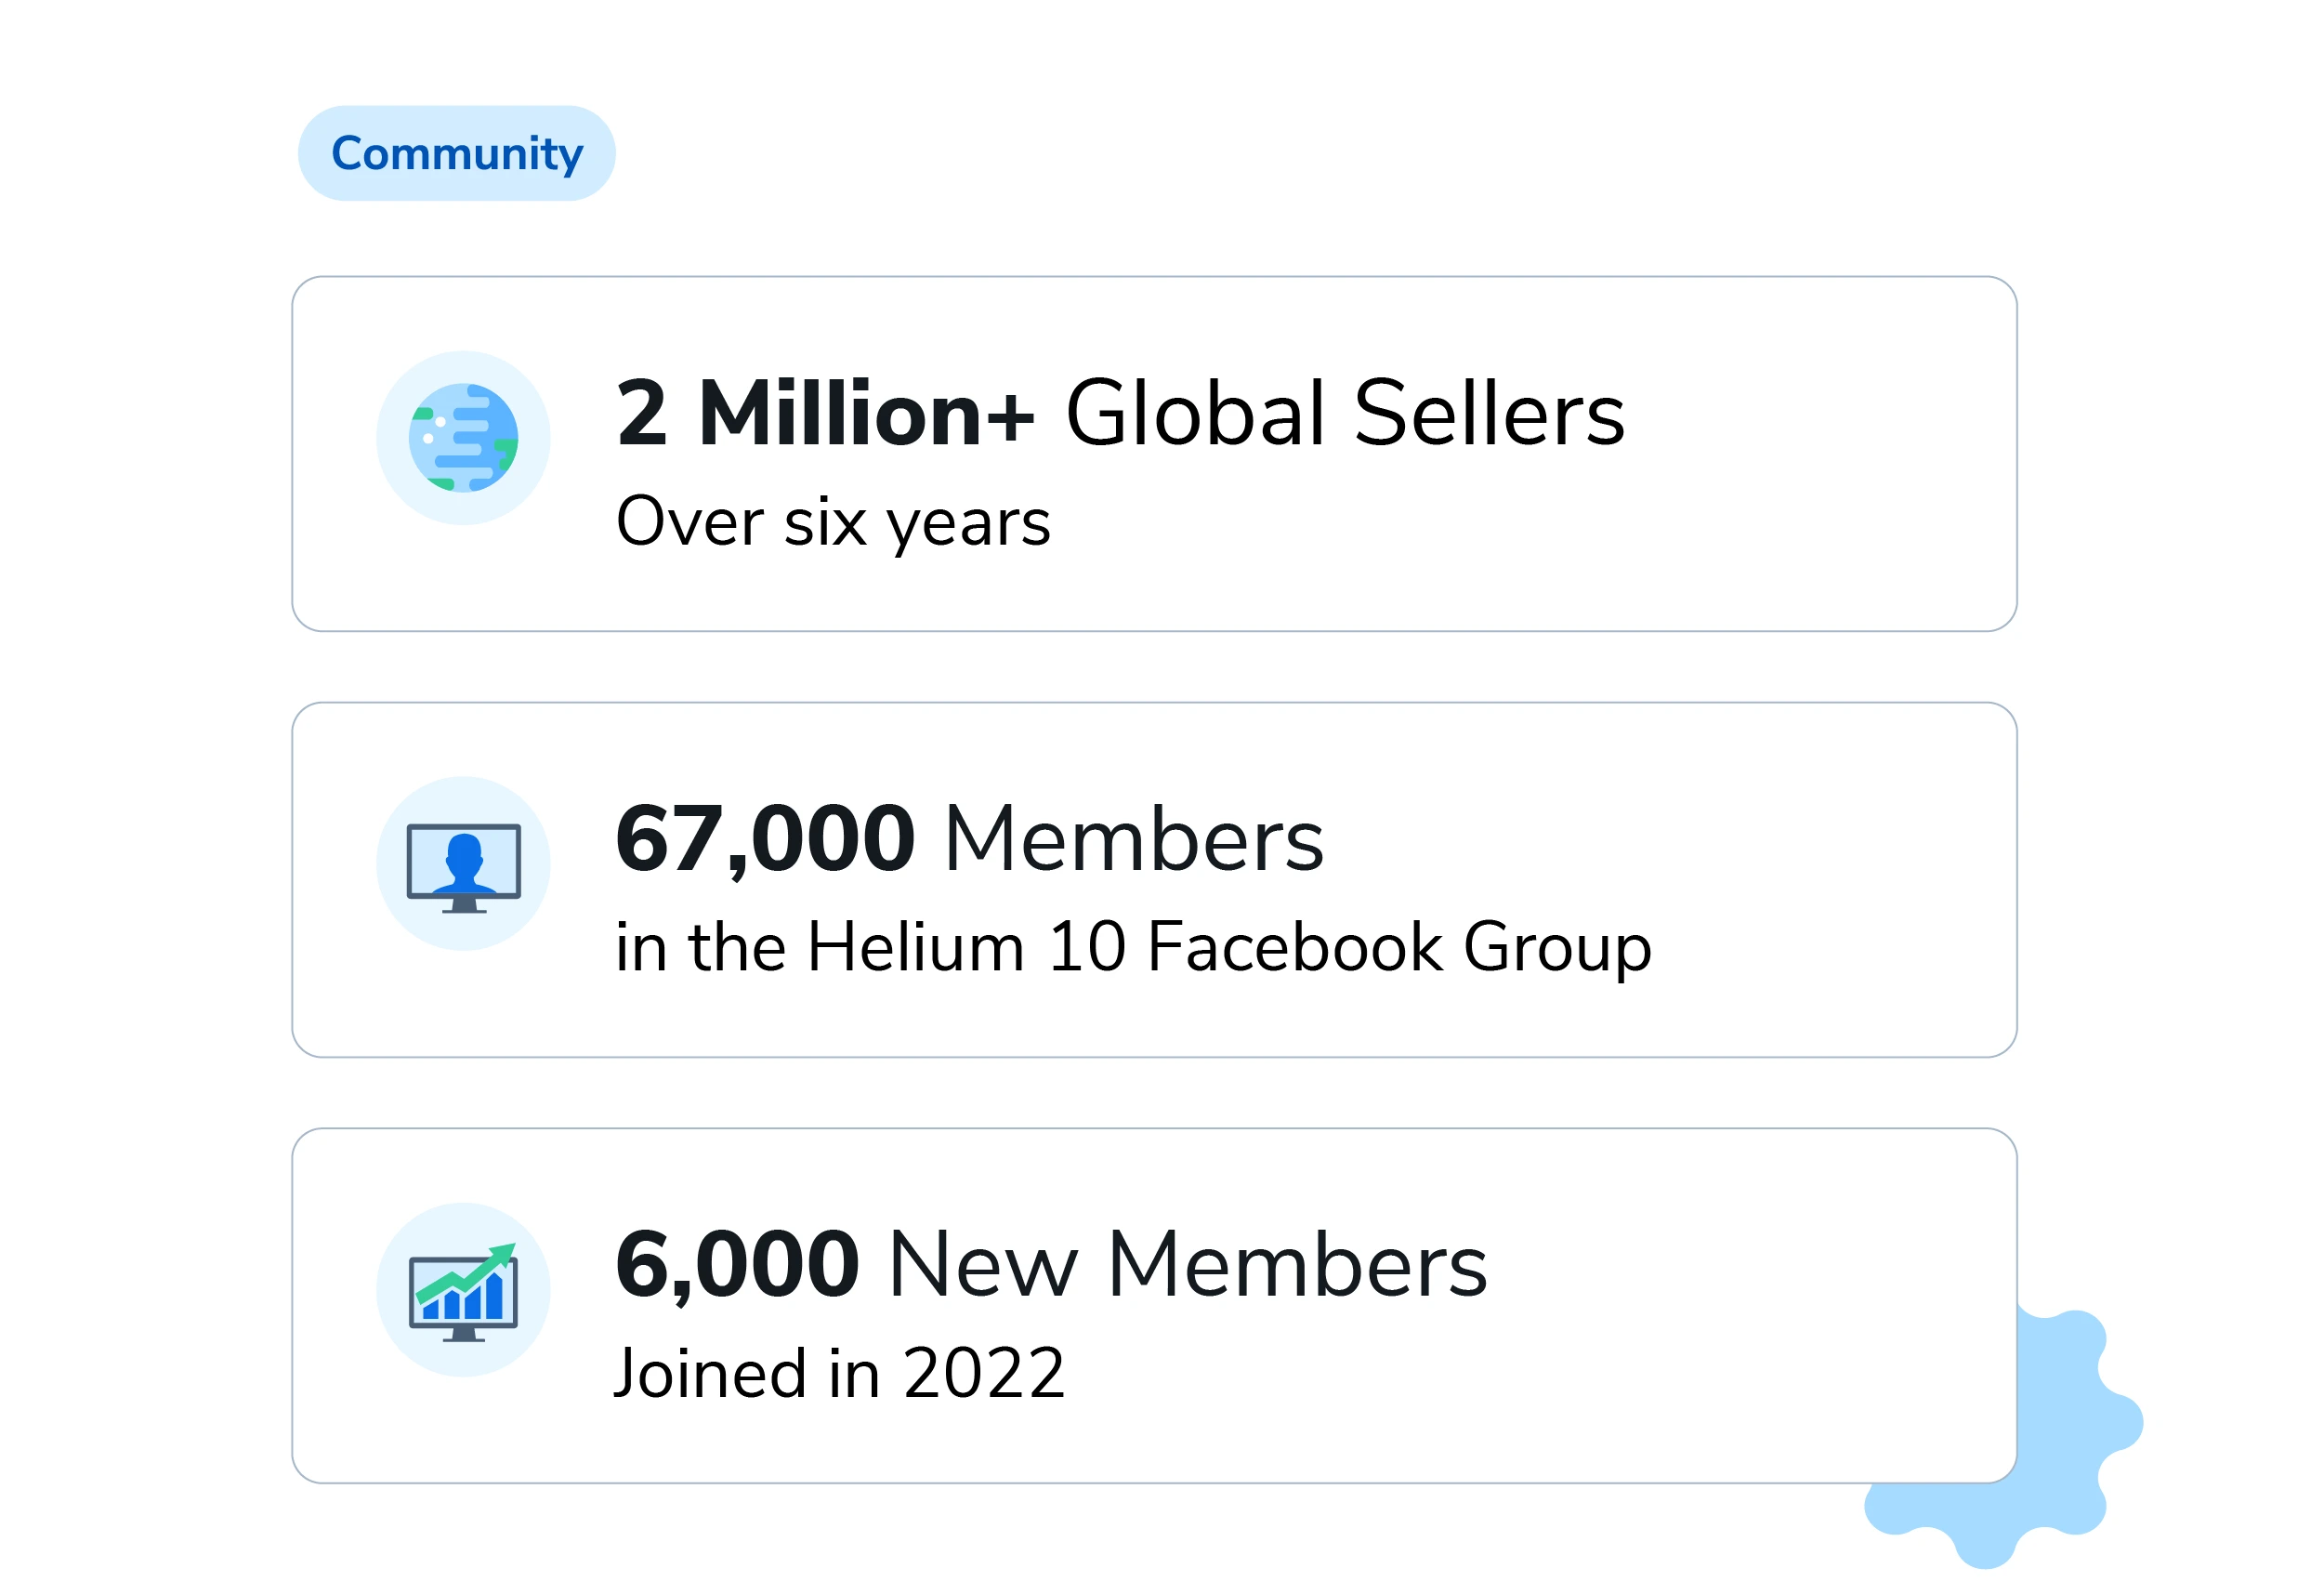 2 Million+ global sellers, 67,000 Facebook members, and 6,000 new members